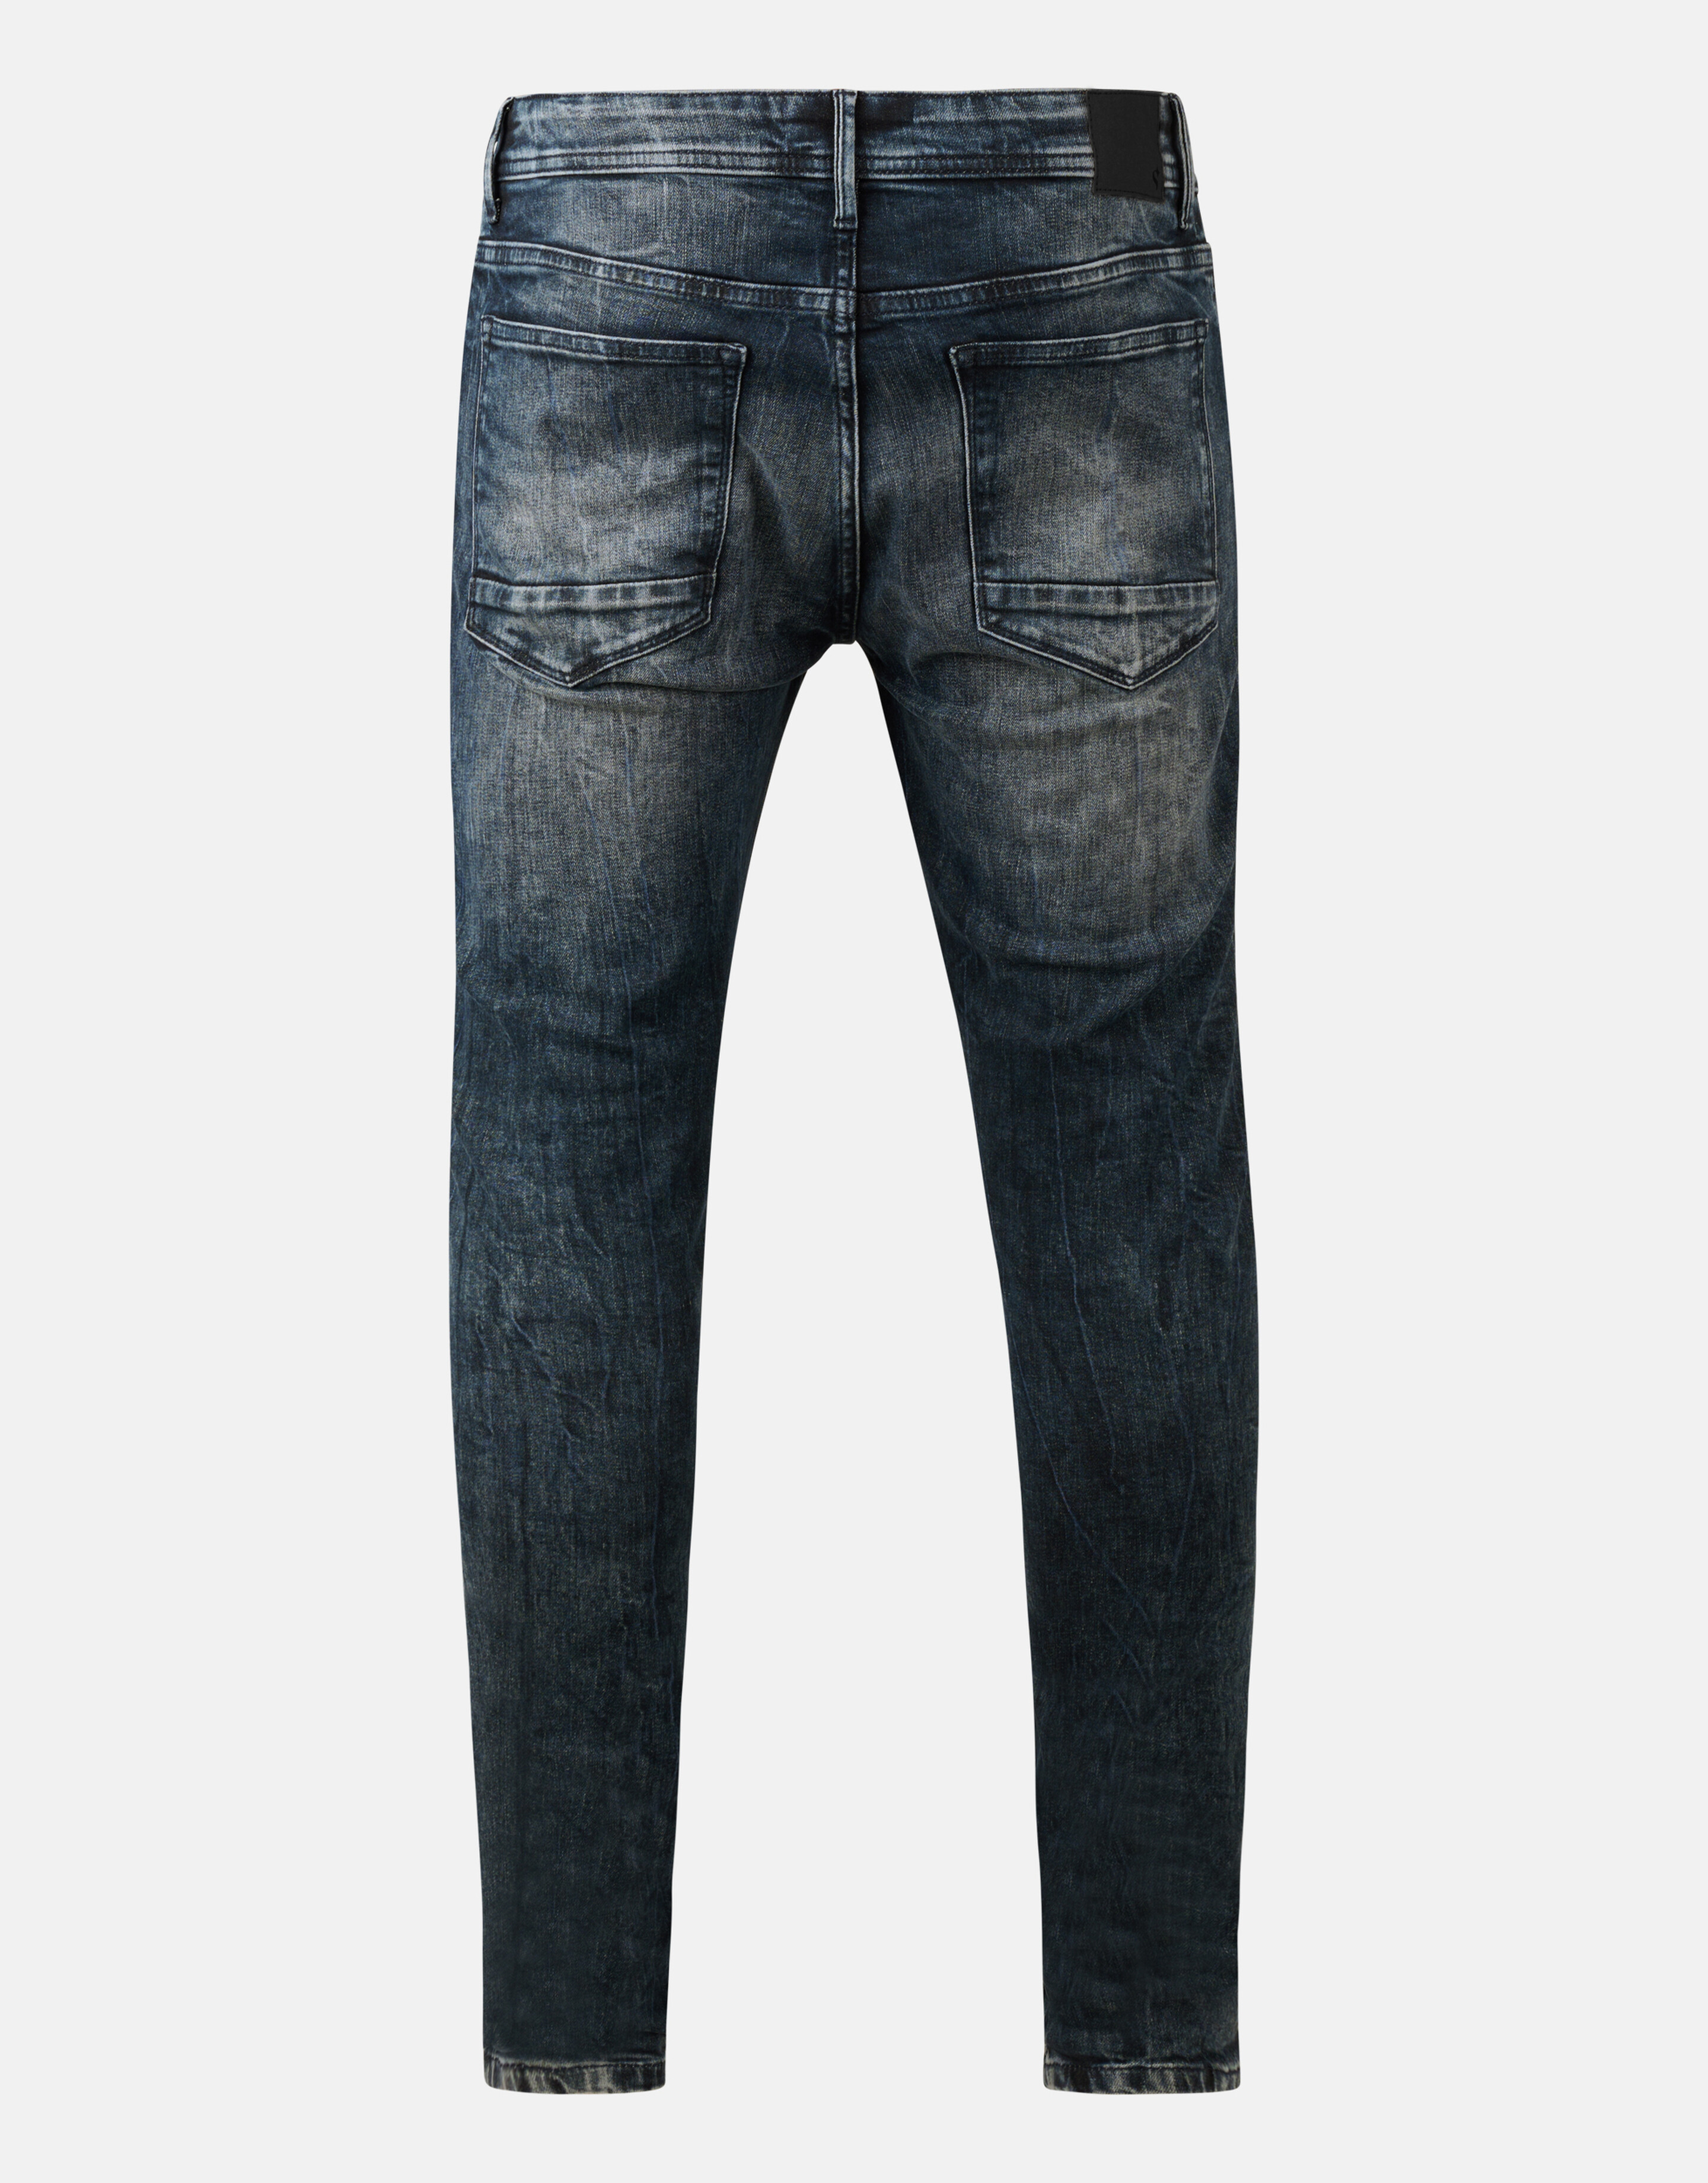 Skinny Fit Jeans Blauw/Grijs L34 SHOEBY MEN